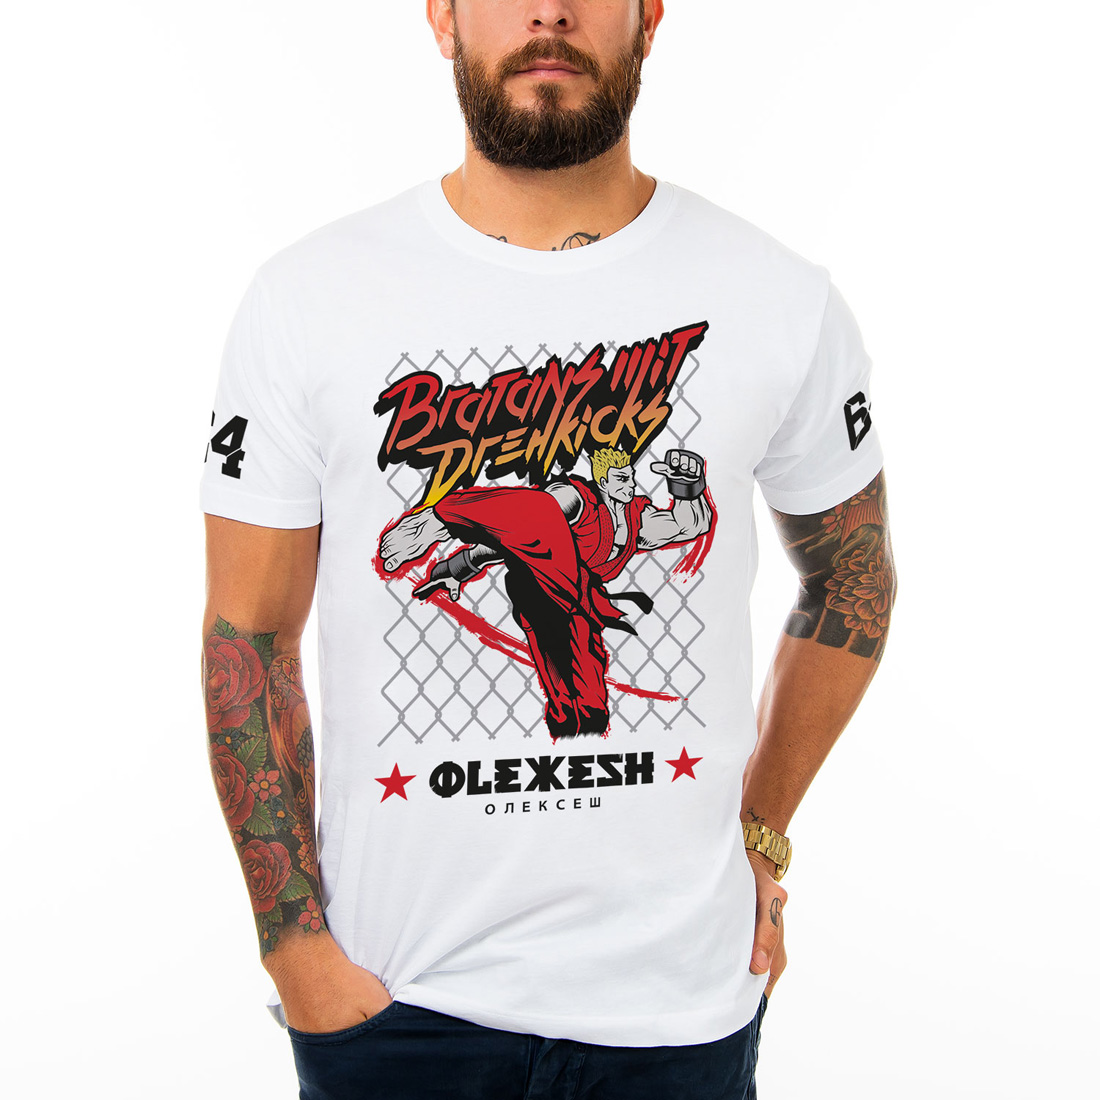 Bravado - Streetfighter - - T-Shirt Olexesh